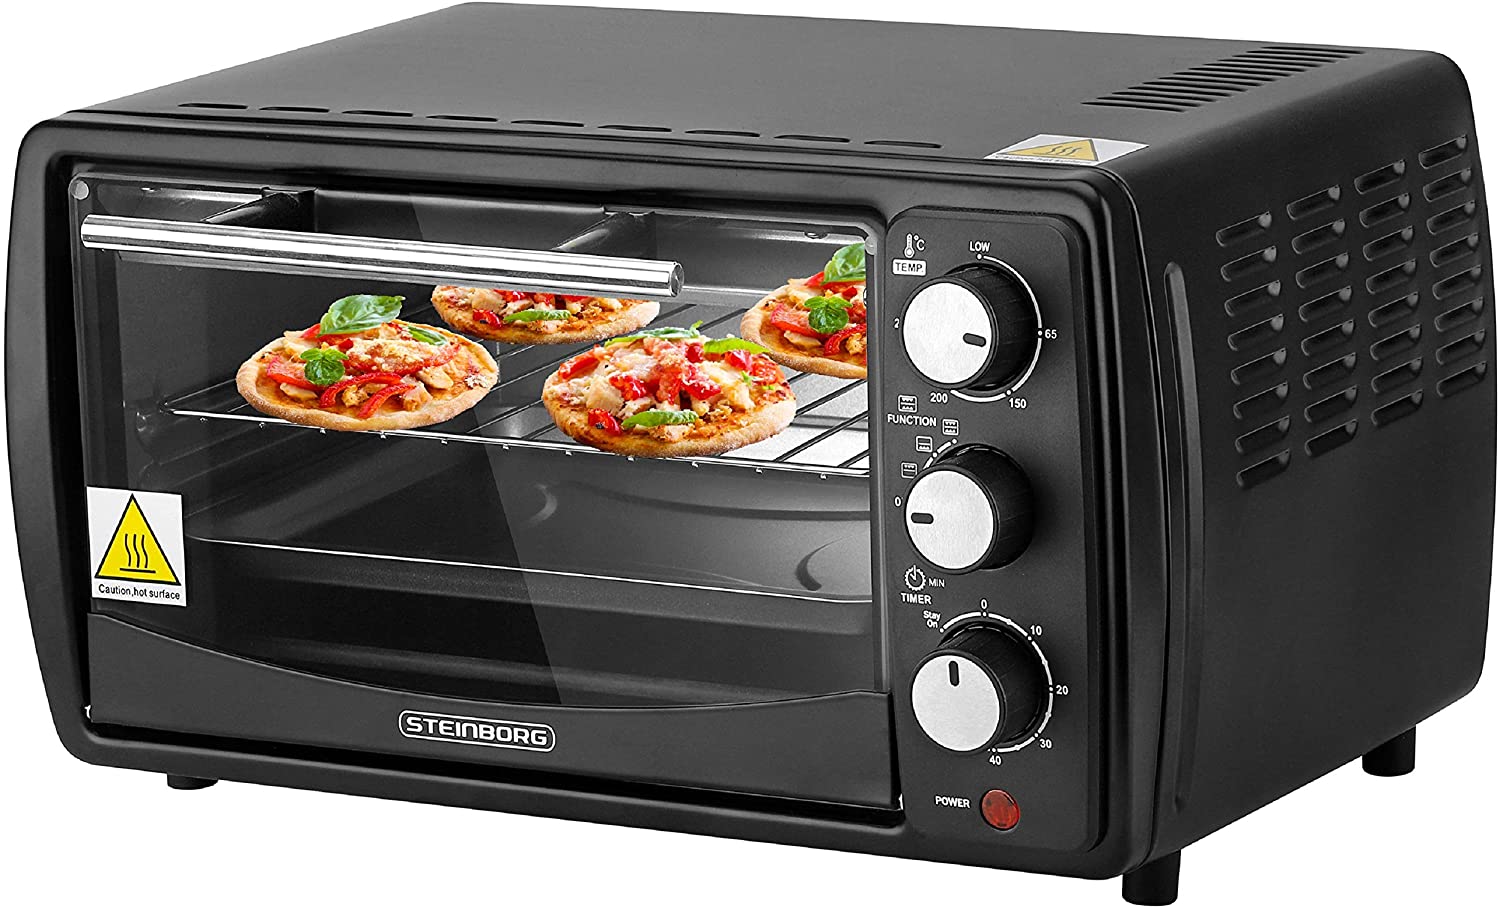 Steinborg 13-Litre Mini Oven, 1200 Watt, Pizza Oven, 65°-230 ° C, Timer, Hinged Crumb